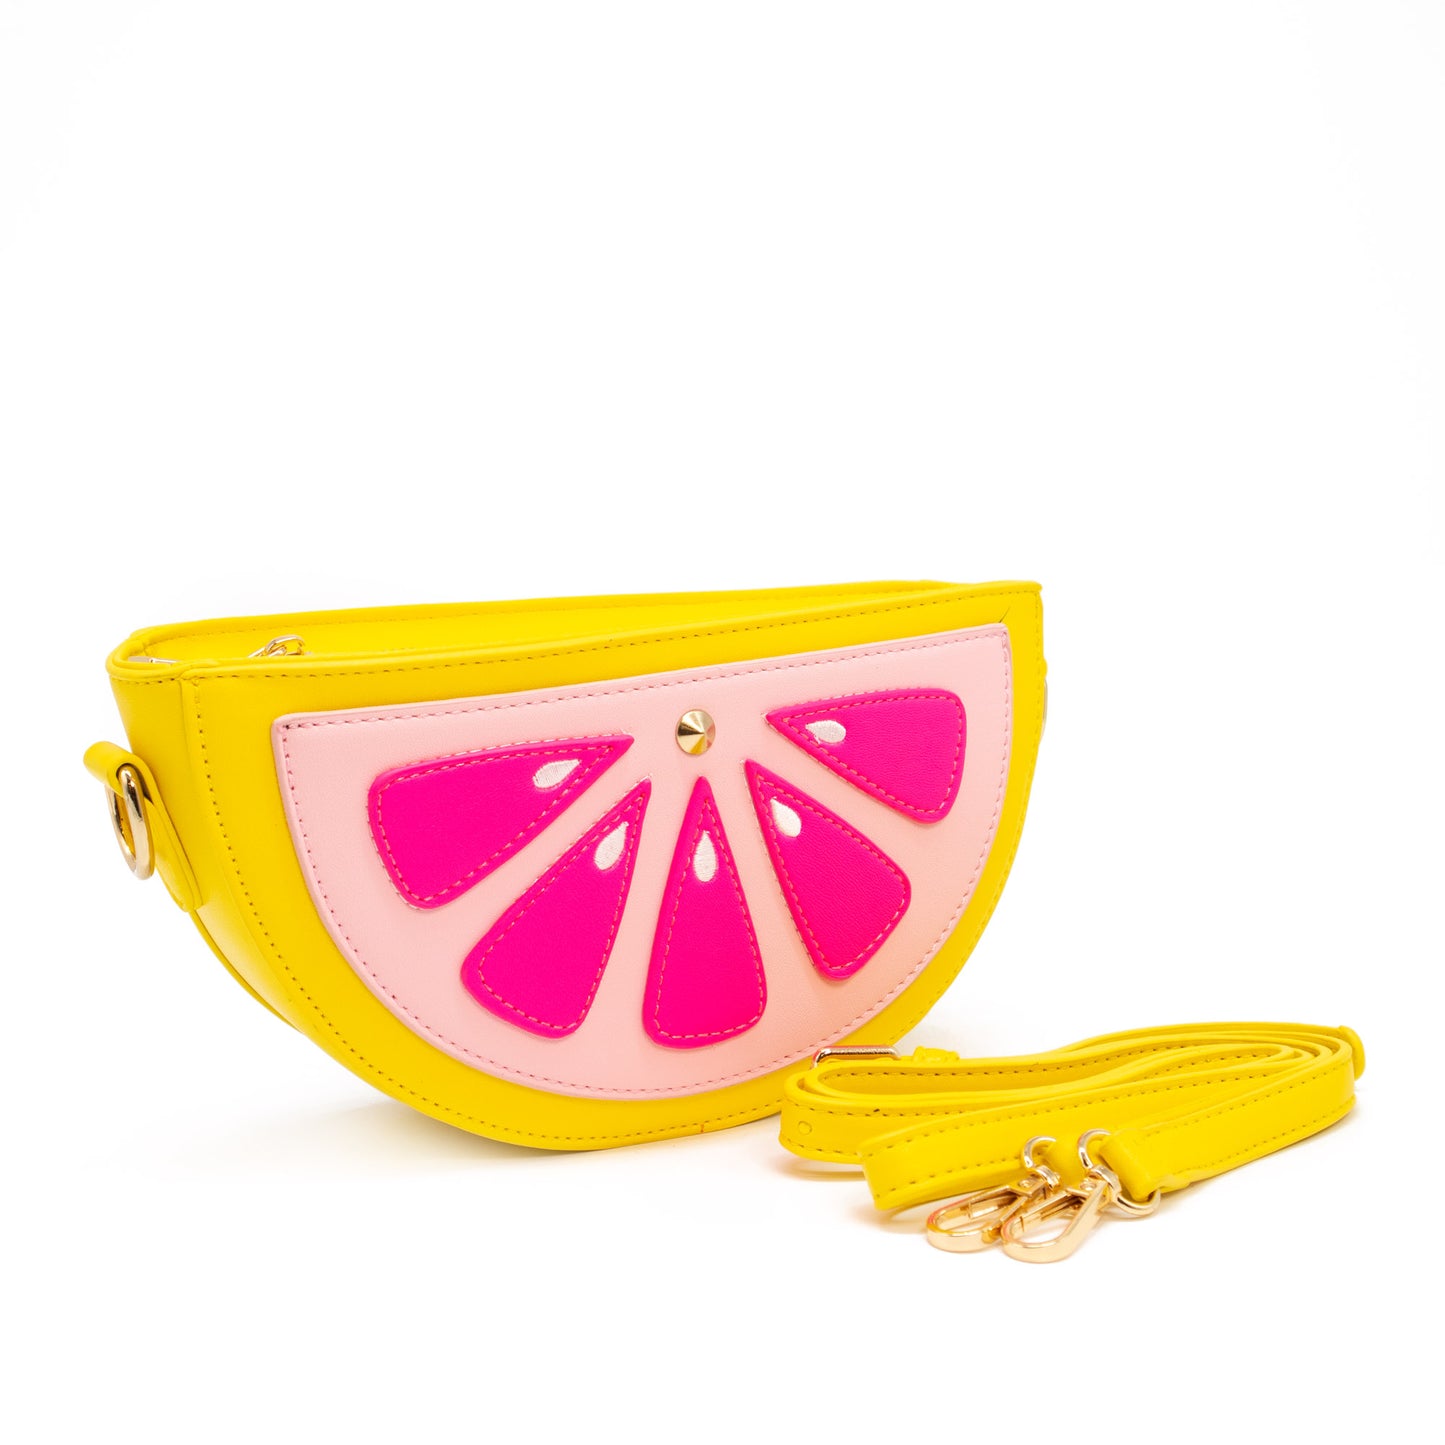 SALE! Juicy Grapefruit Handbag